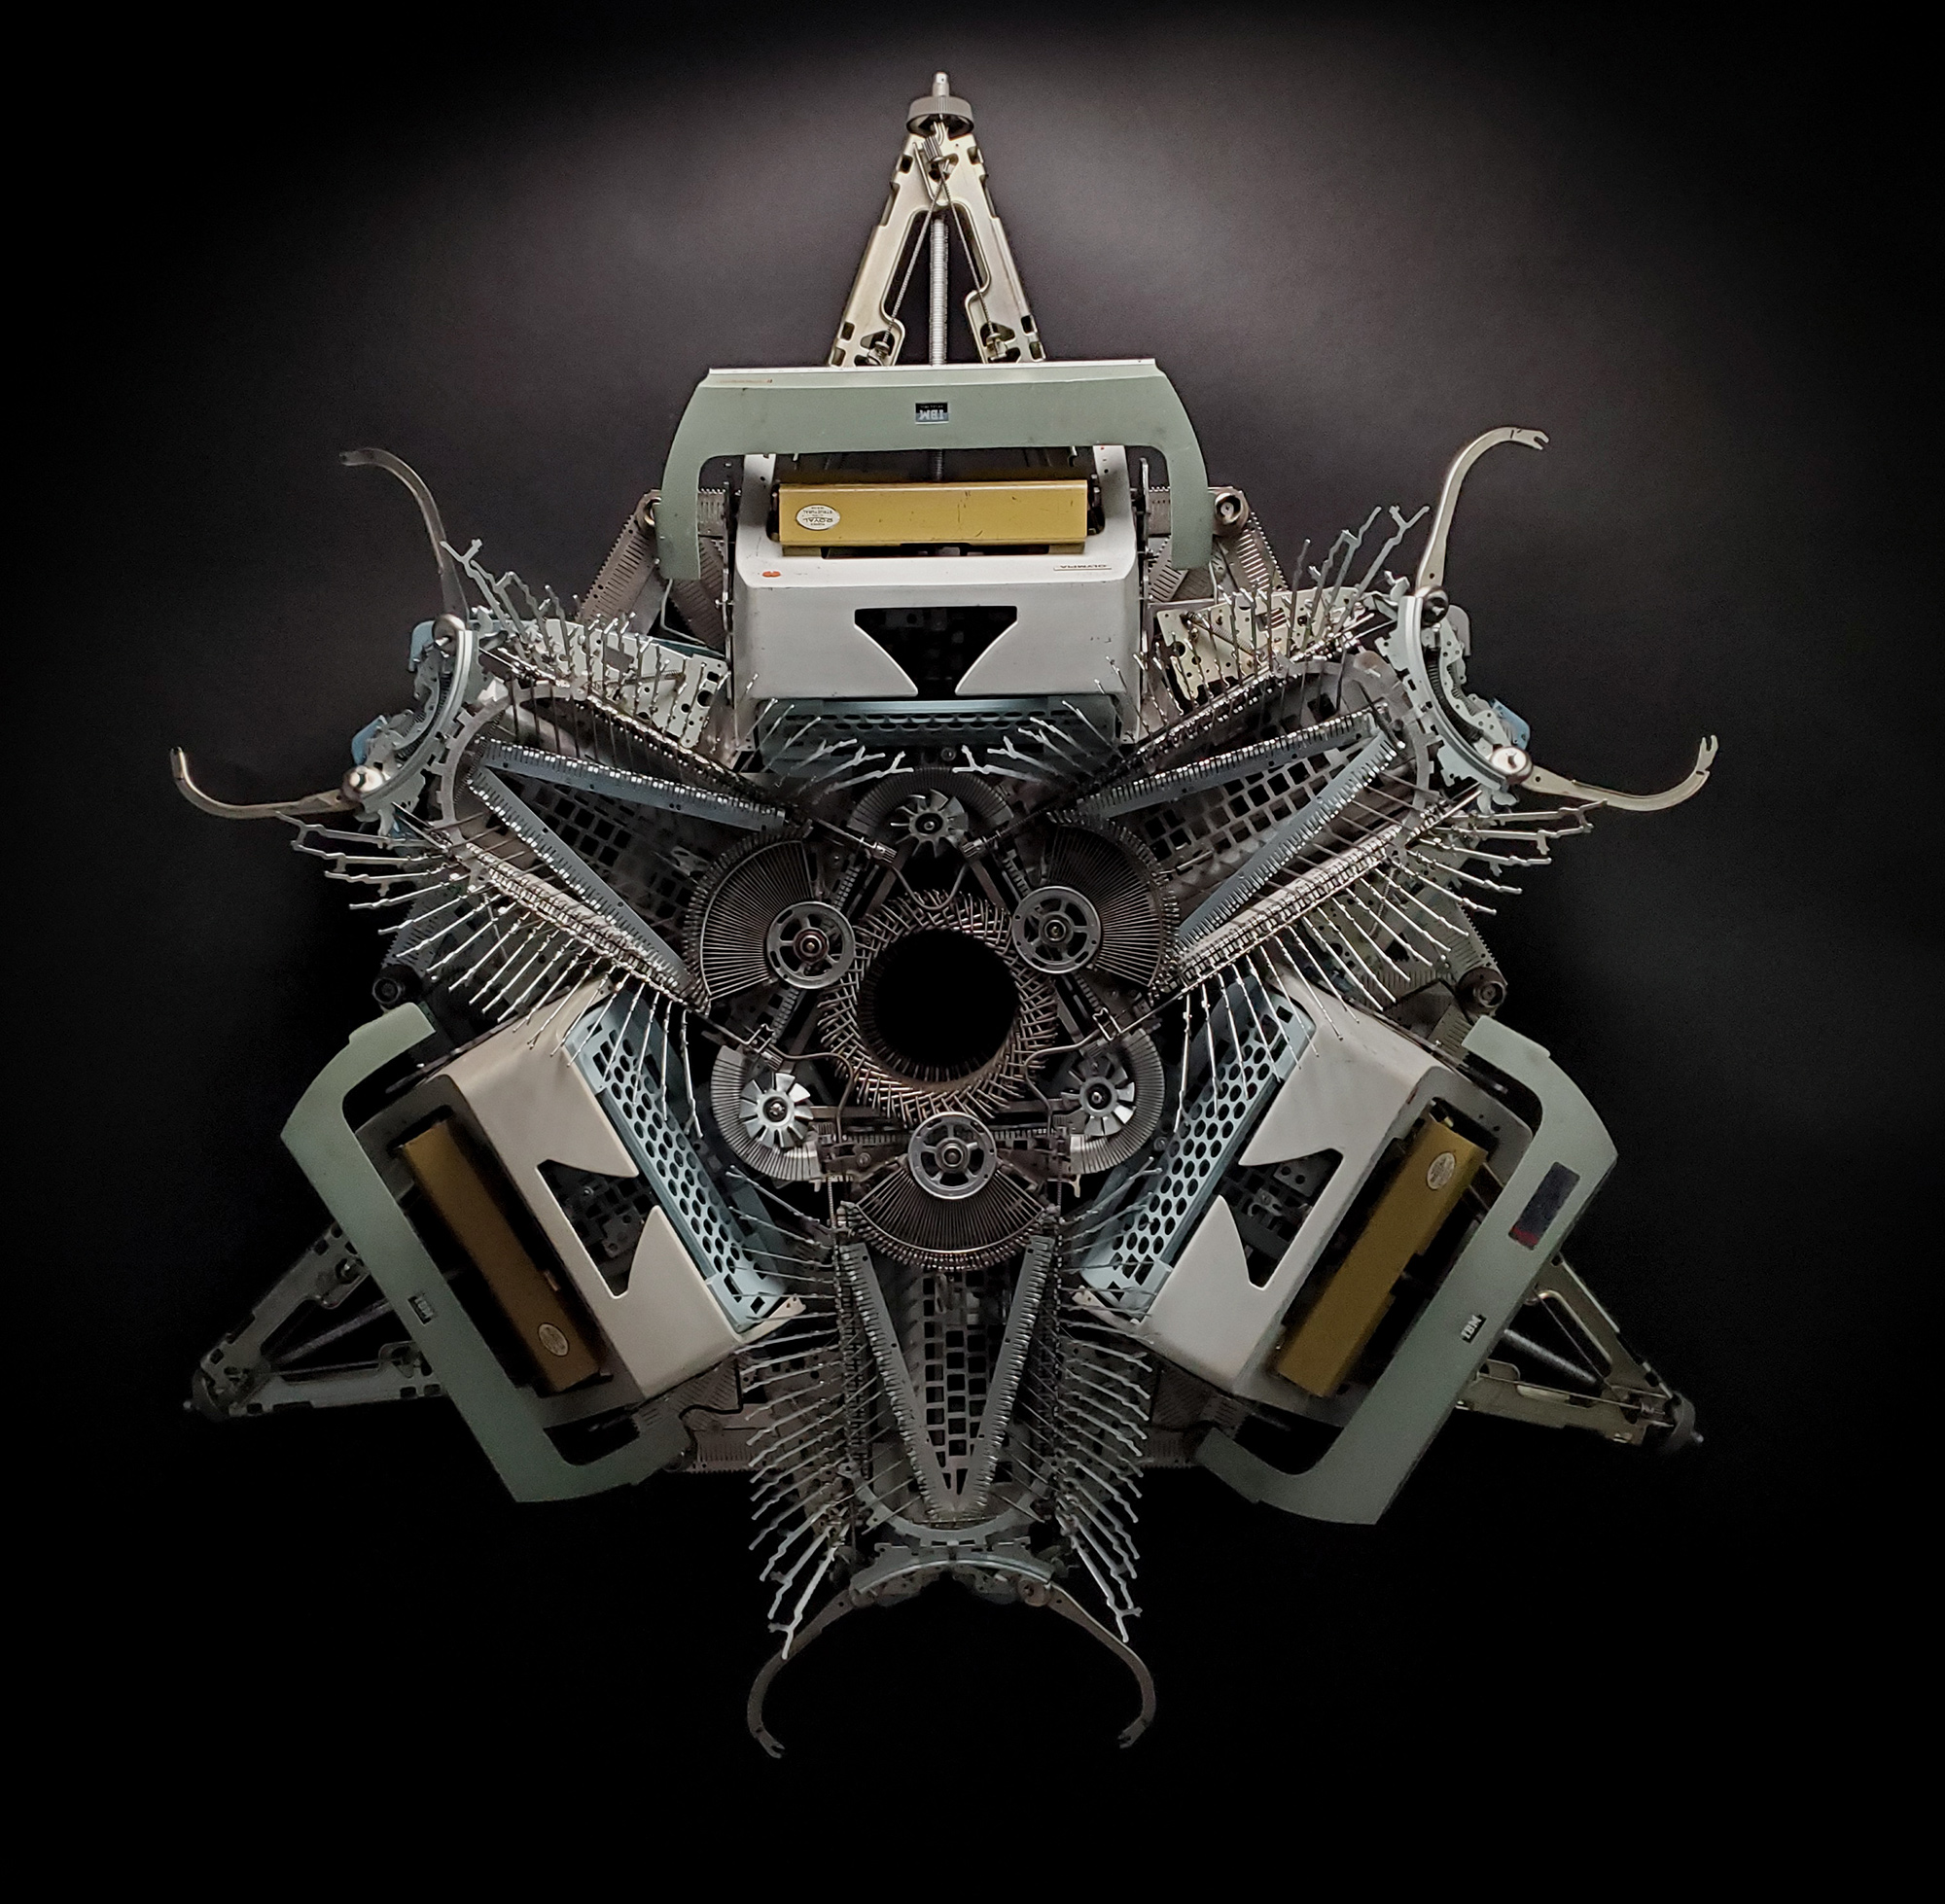 Symmetrical Typewriter Sculptures by Artist Jeremy Mayer Merge the Organic and Manufactured | 国外美陈 美陈网站 美陈前沿 